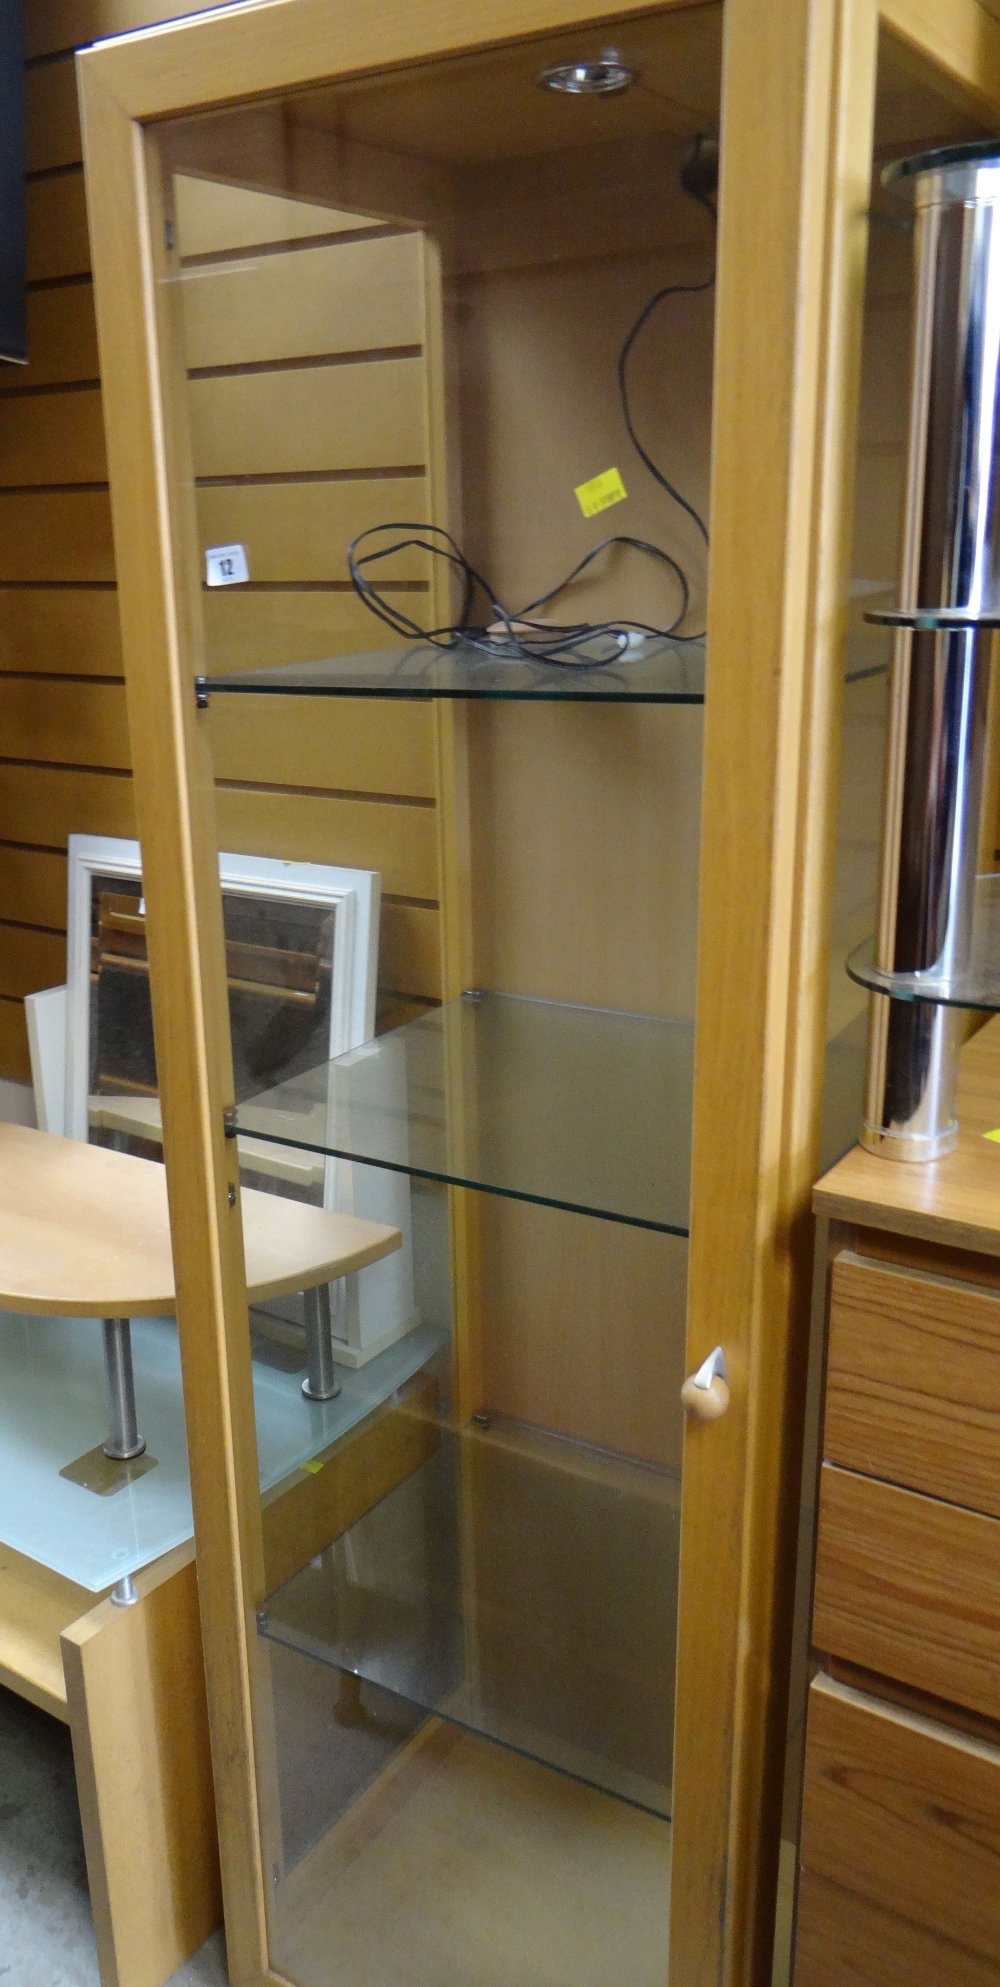 A modern beech wood tall display cabinet, toilet mirror etc